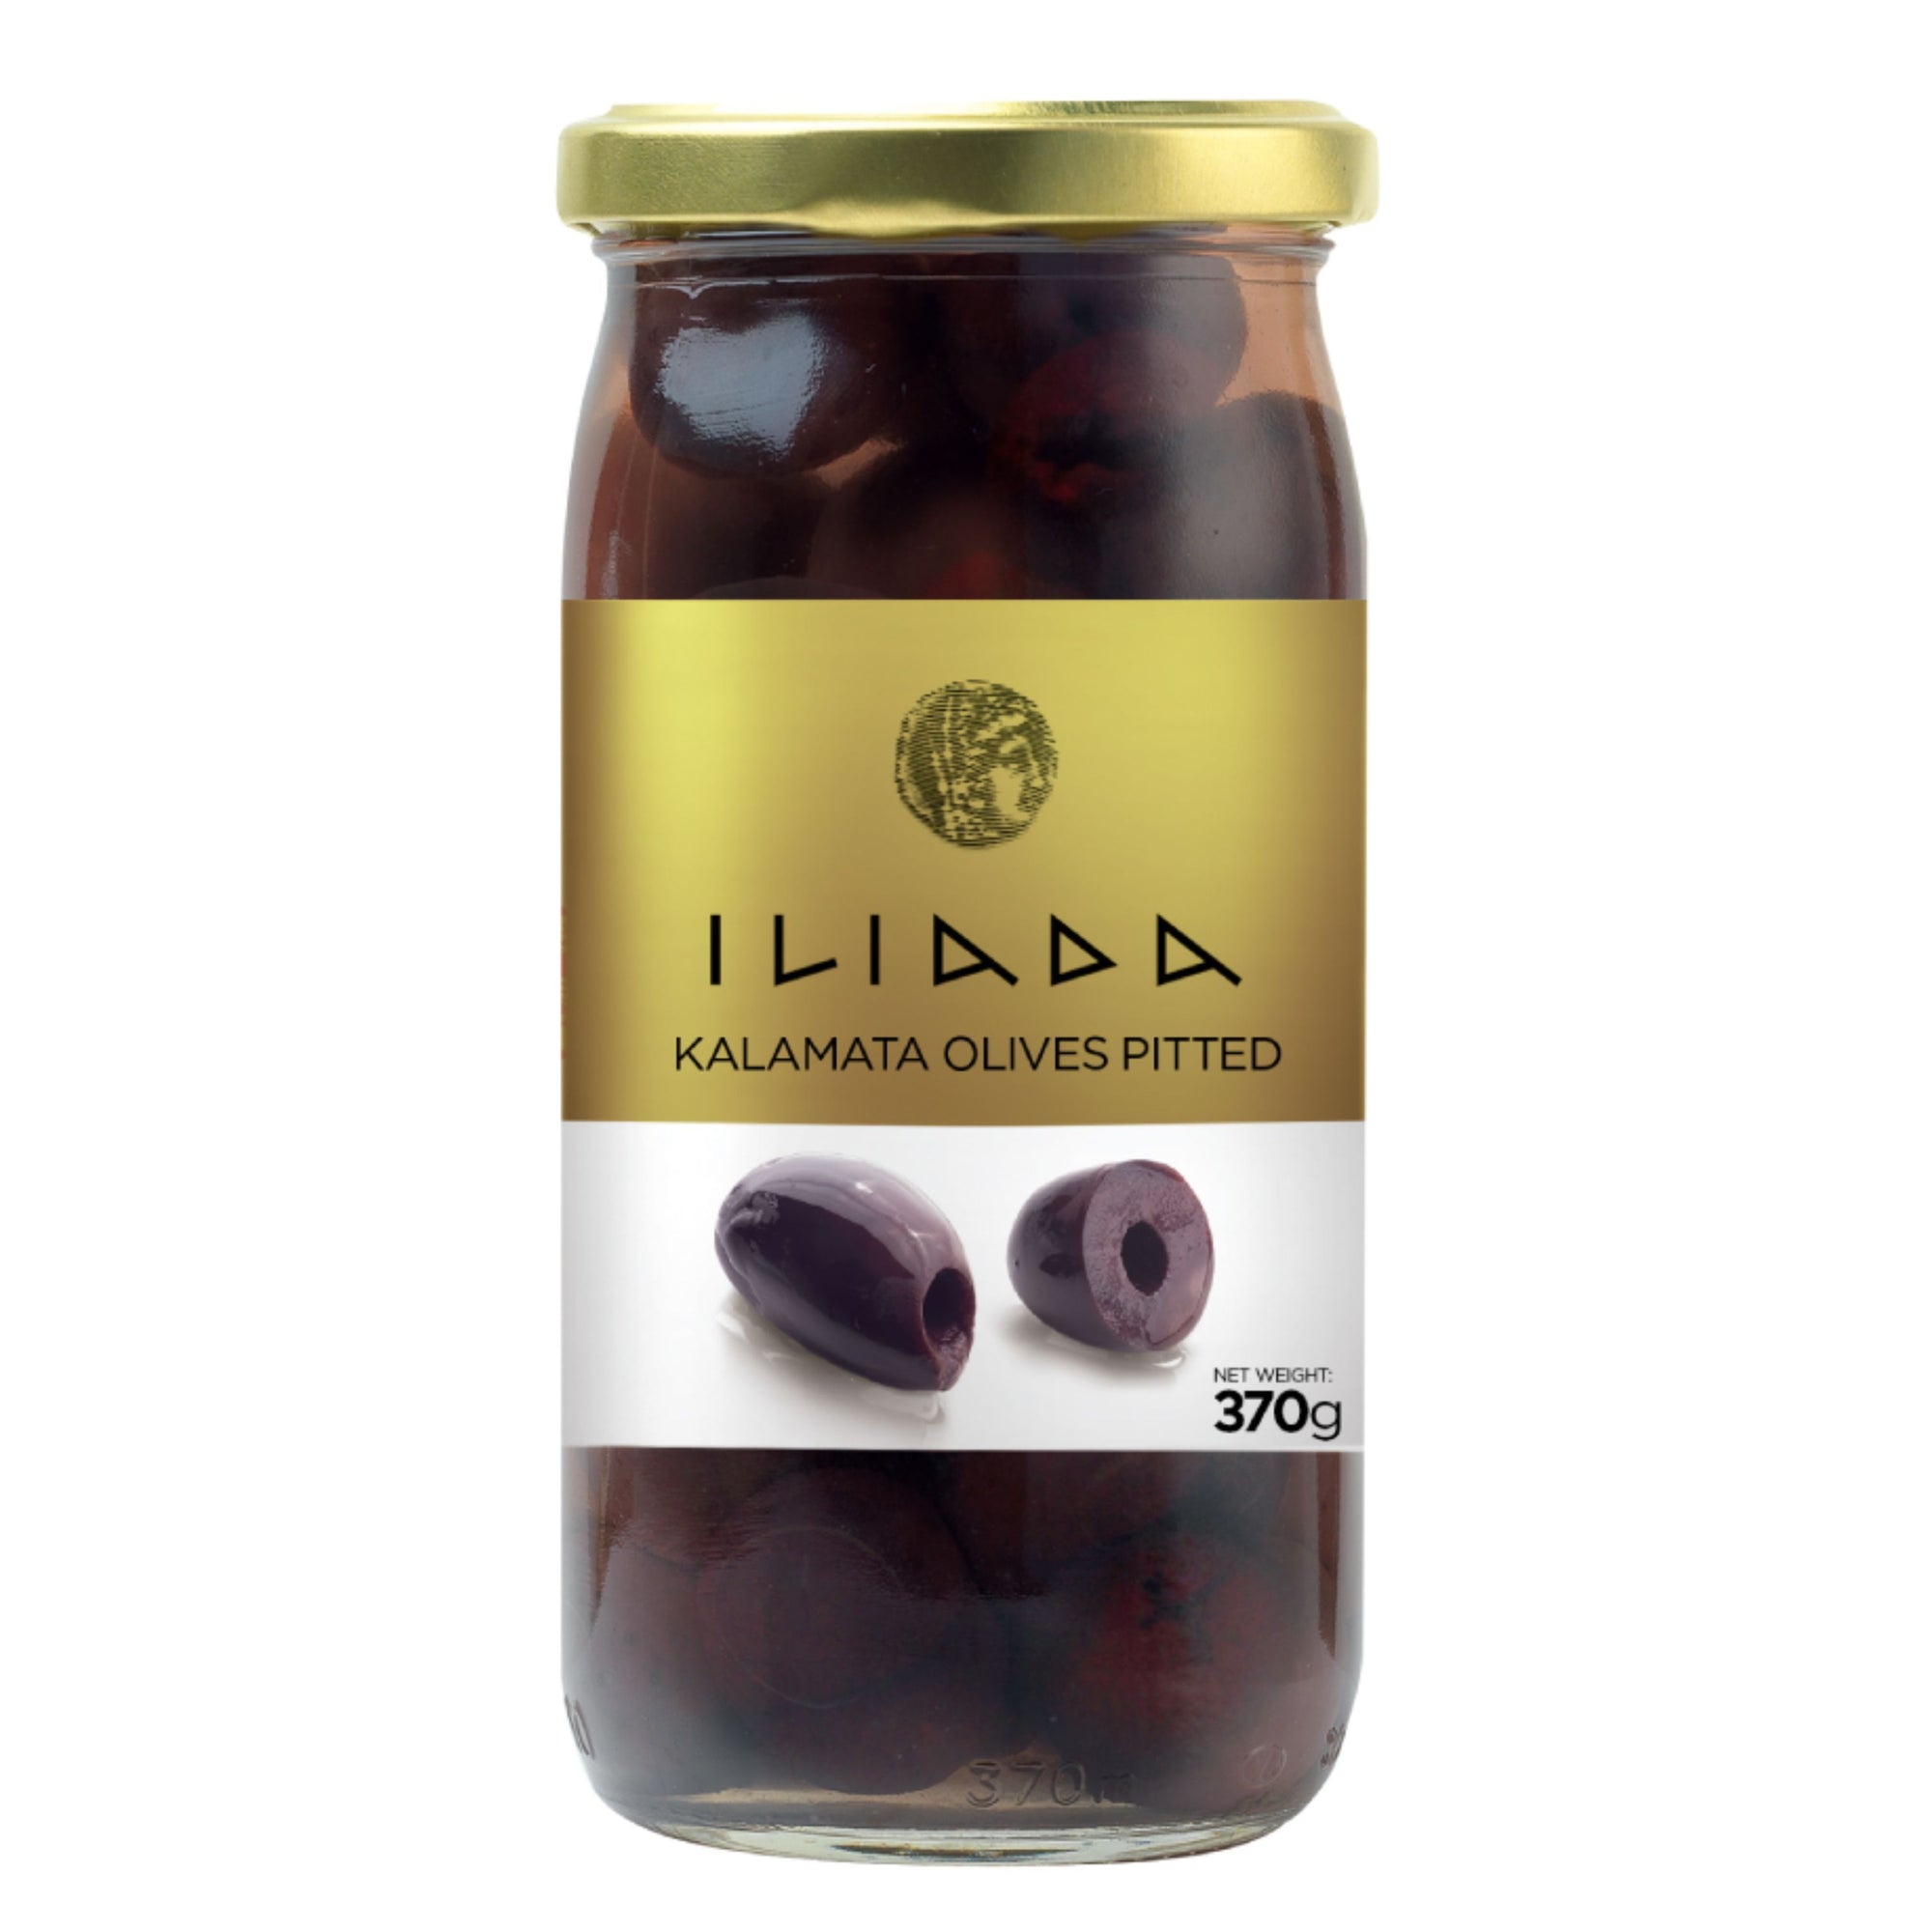 Kalamata Pitted Olives 'Iliada' 370g - Gold Line